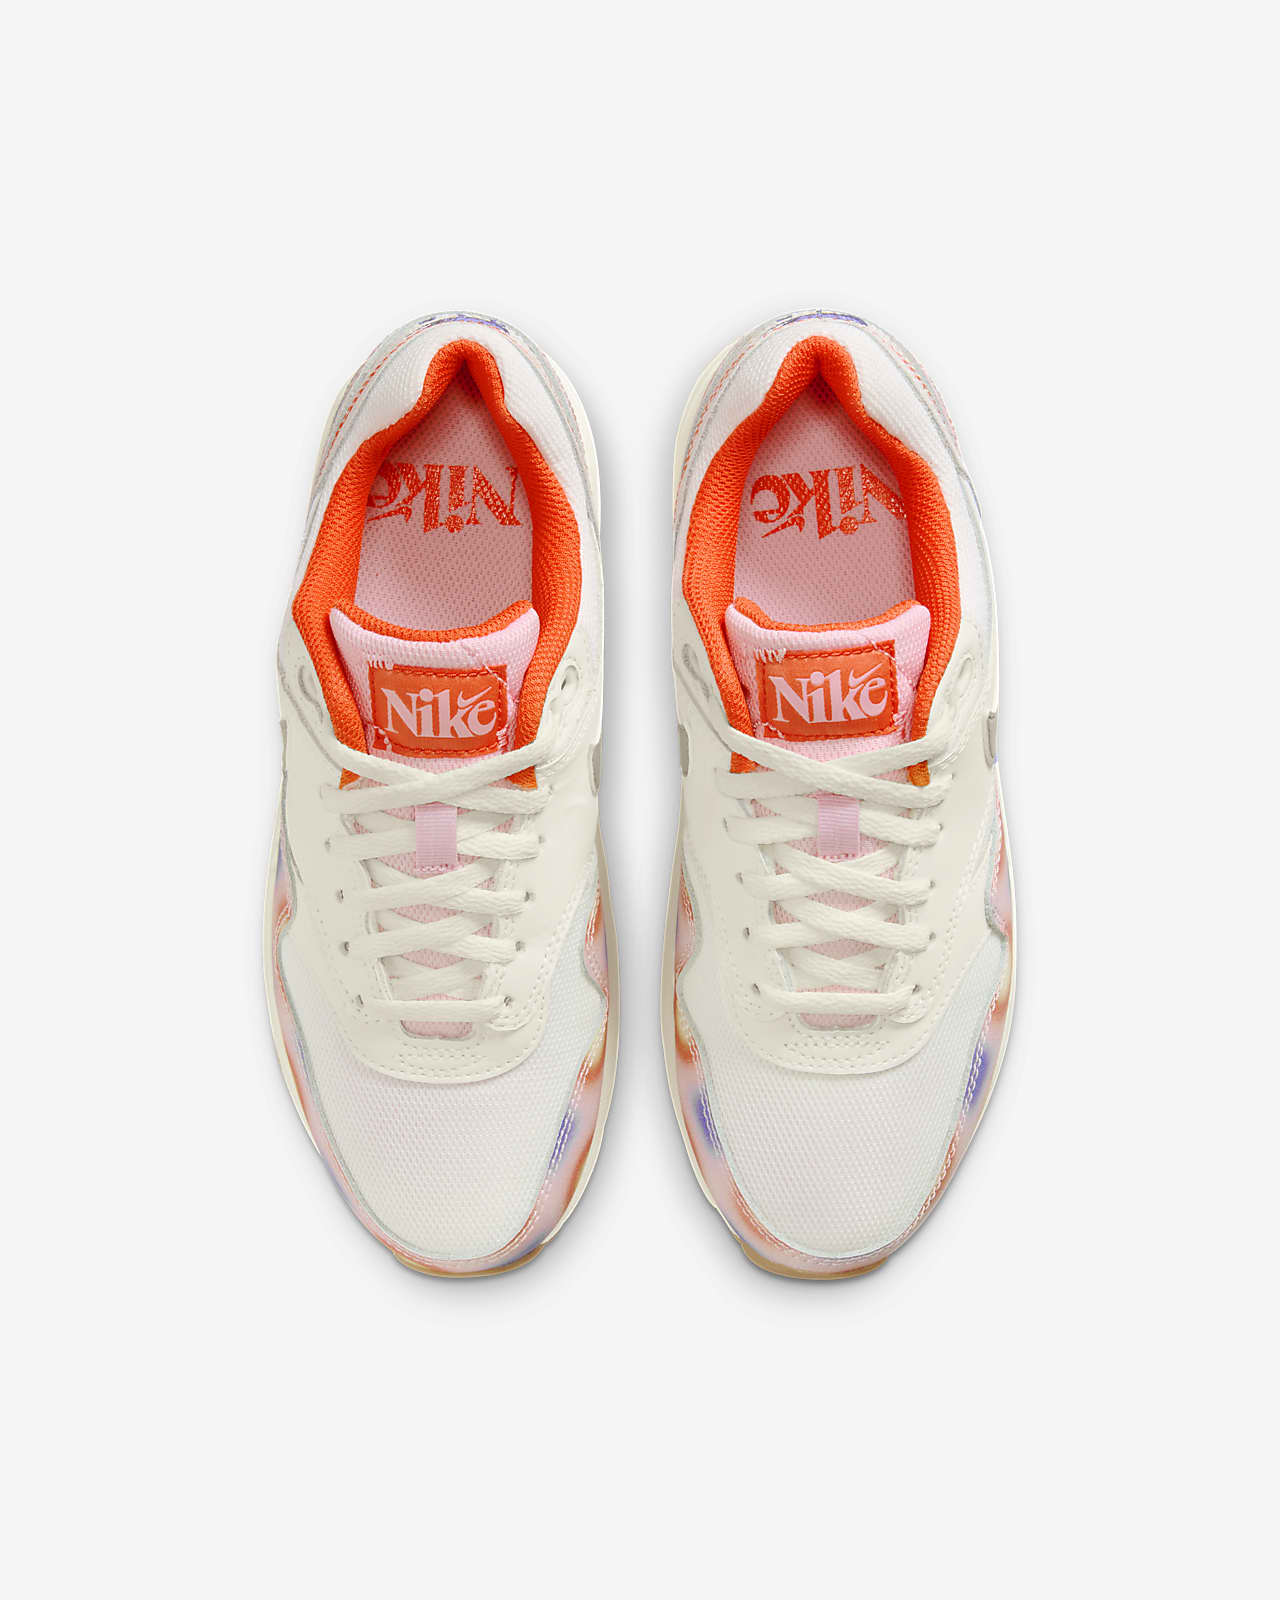 Nike Air Max 90 LTR SE Big Kids' Shoes